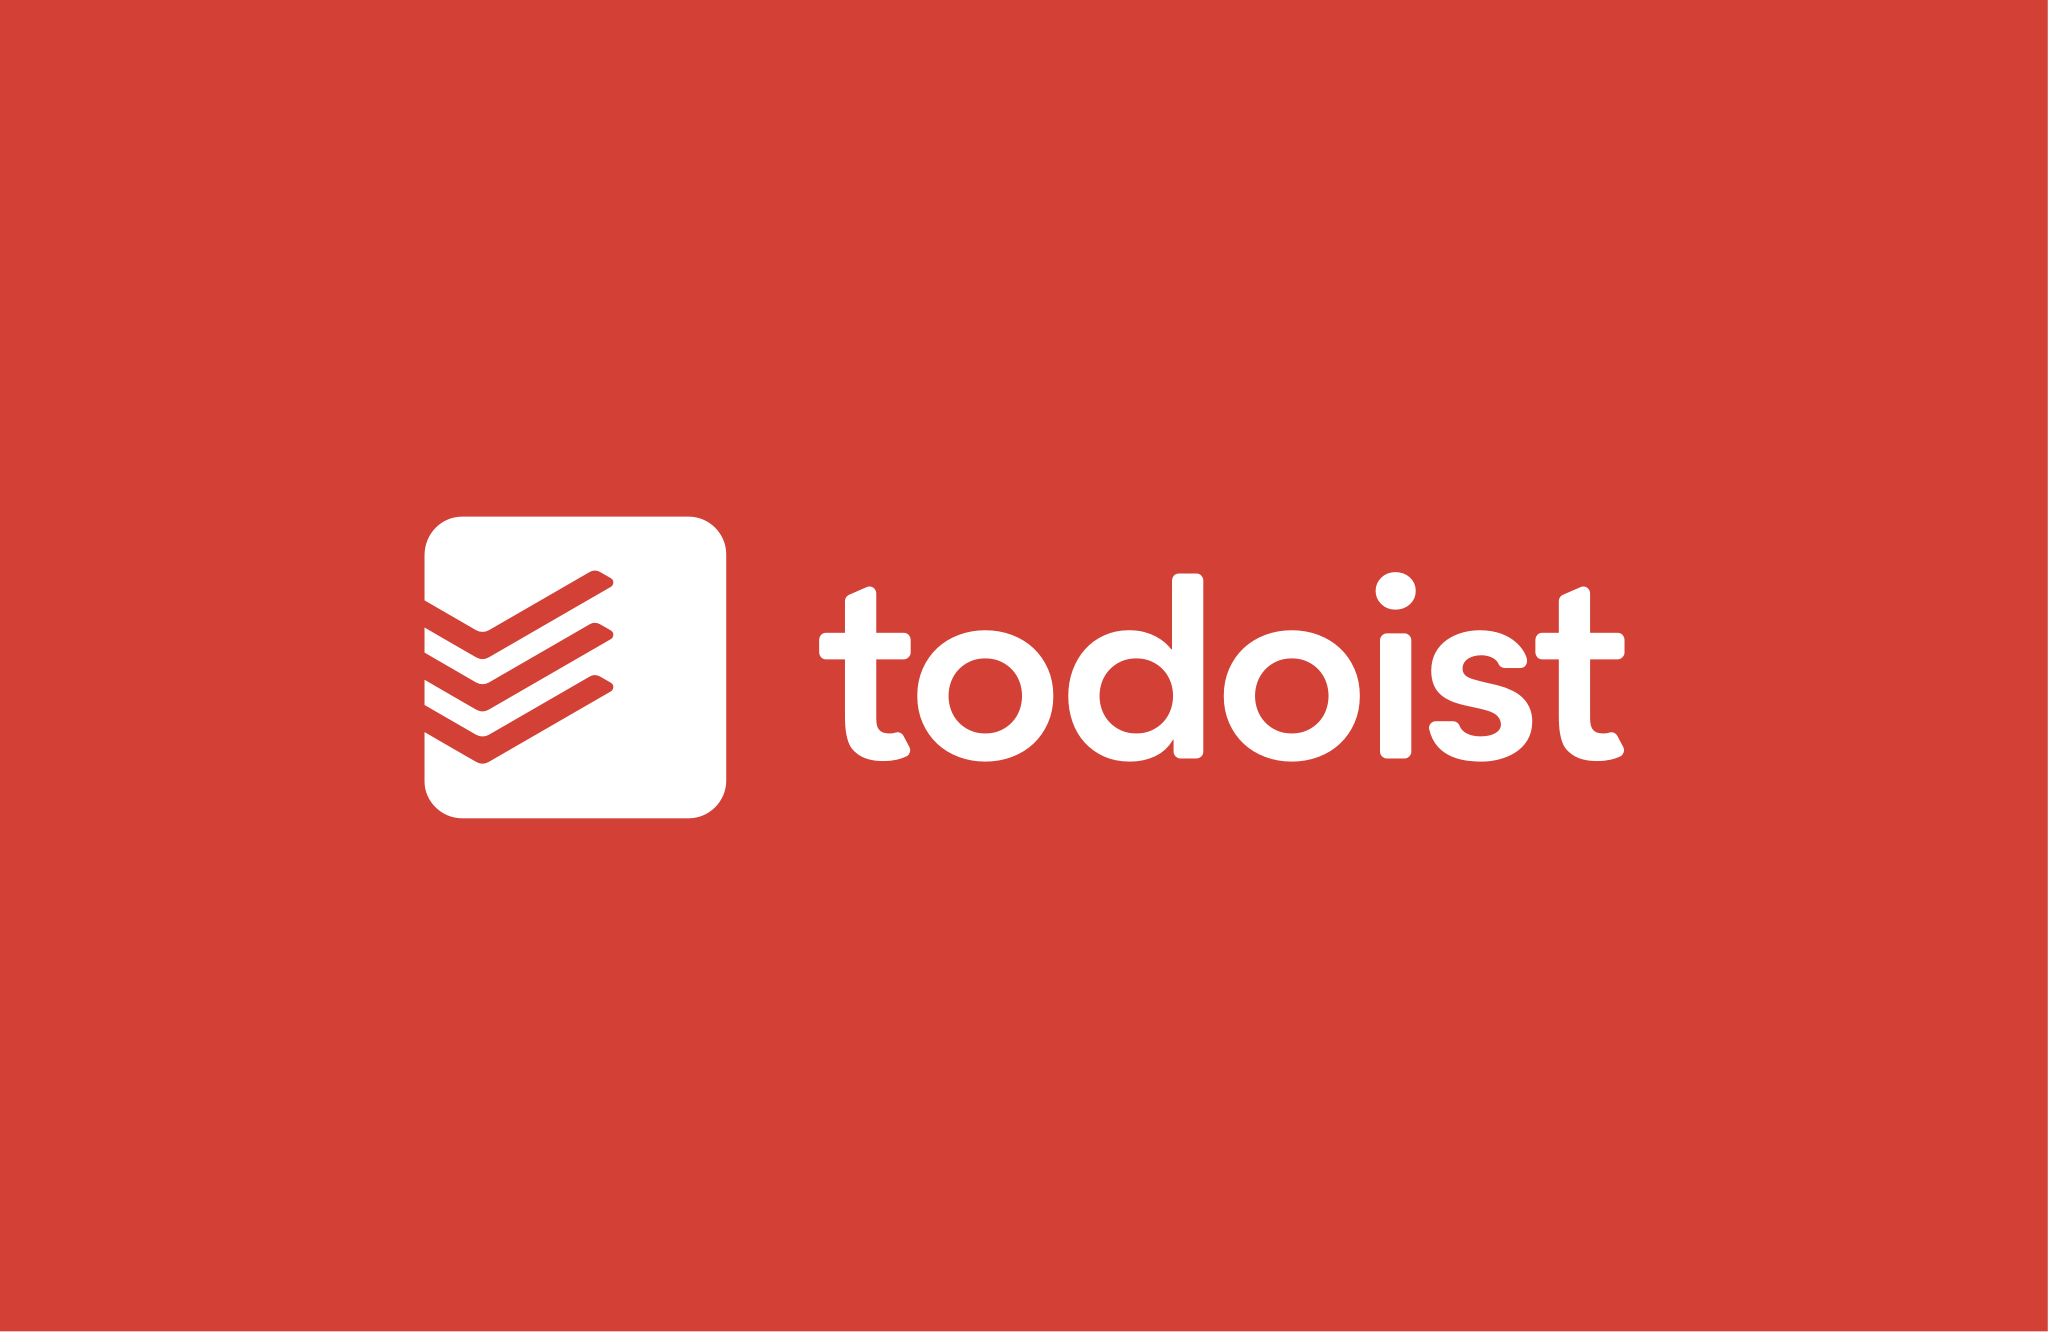 Todoist new logo red